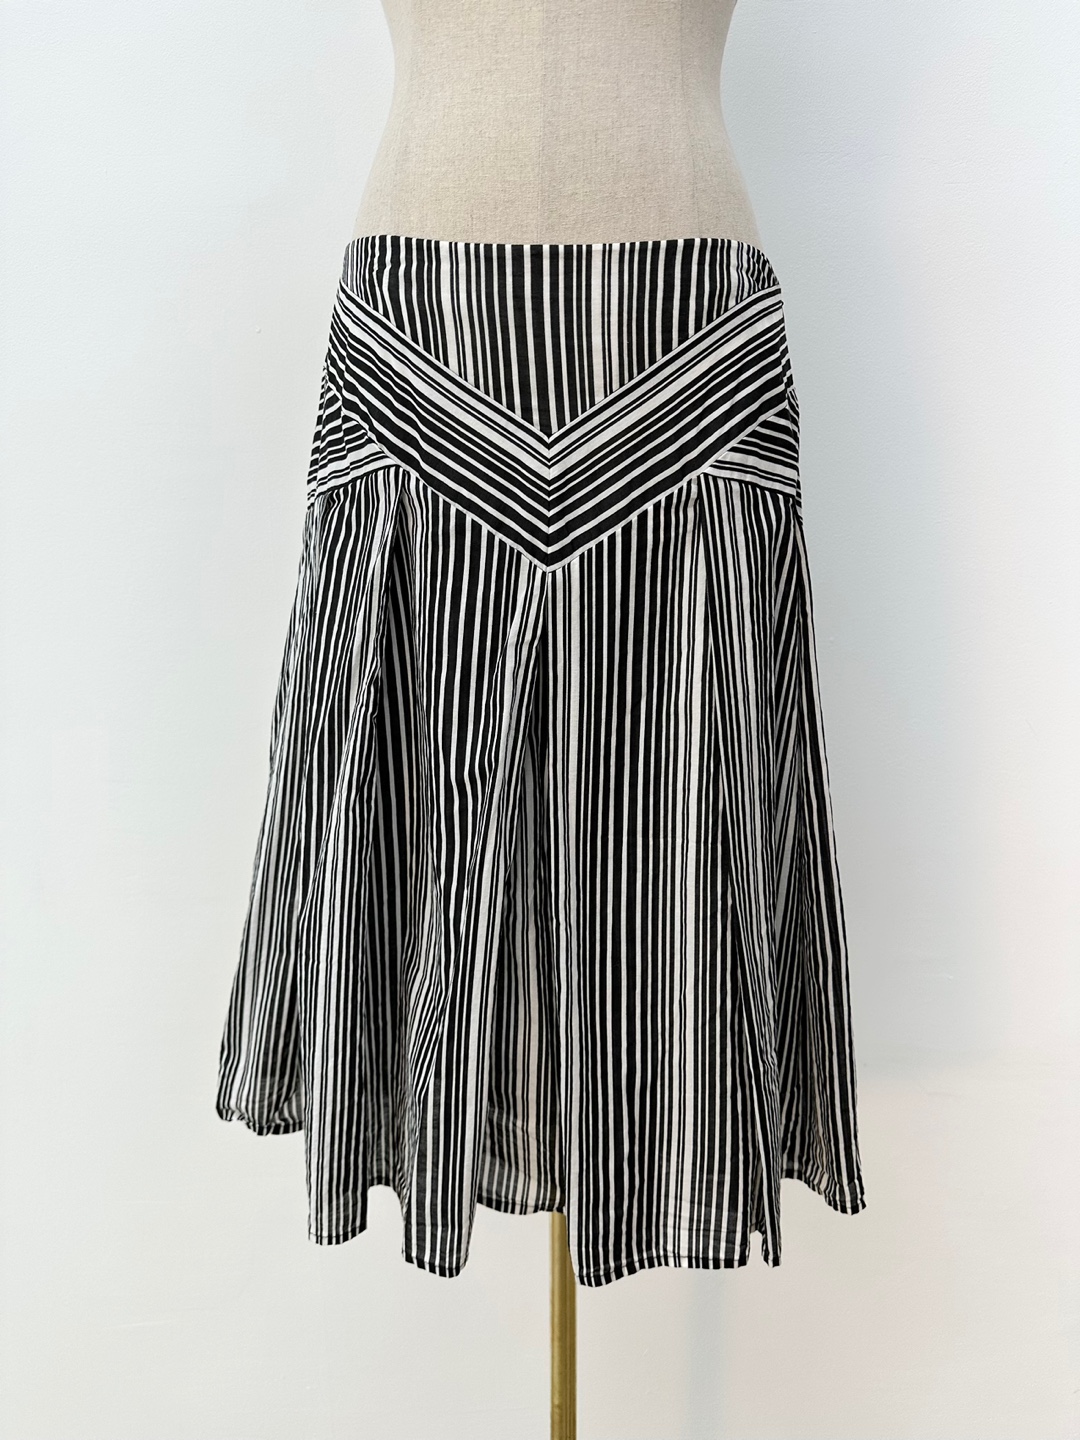 Laura Ashley Striped cotton Skirt(29-30inch)